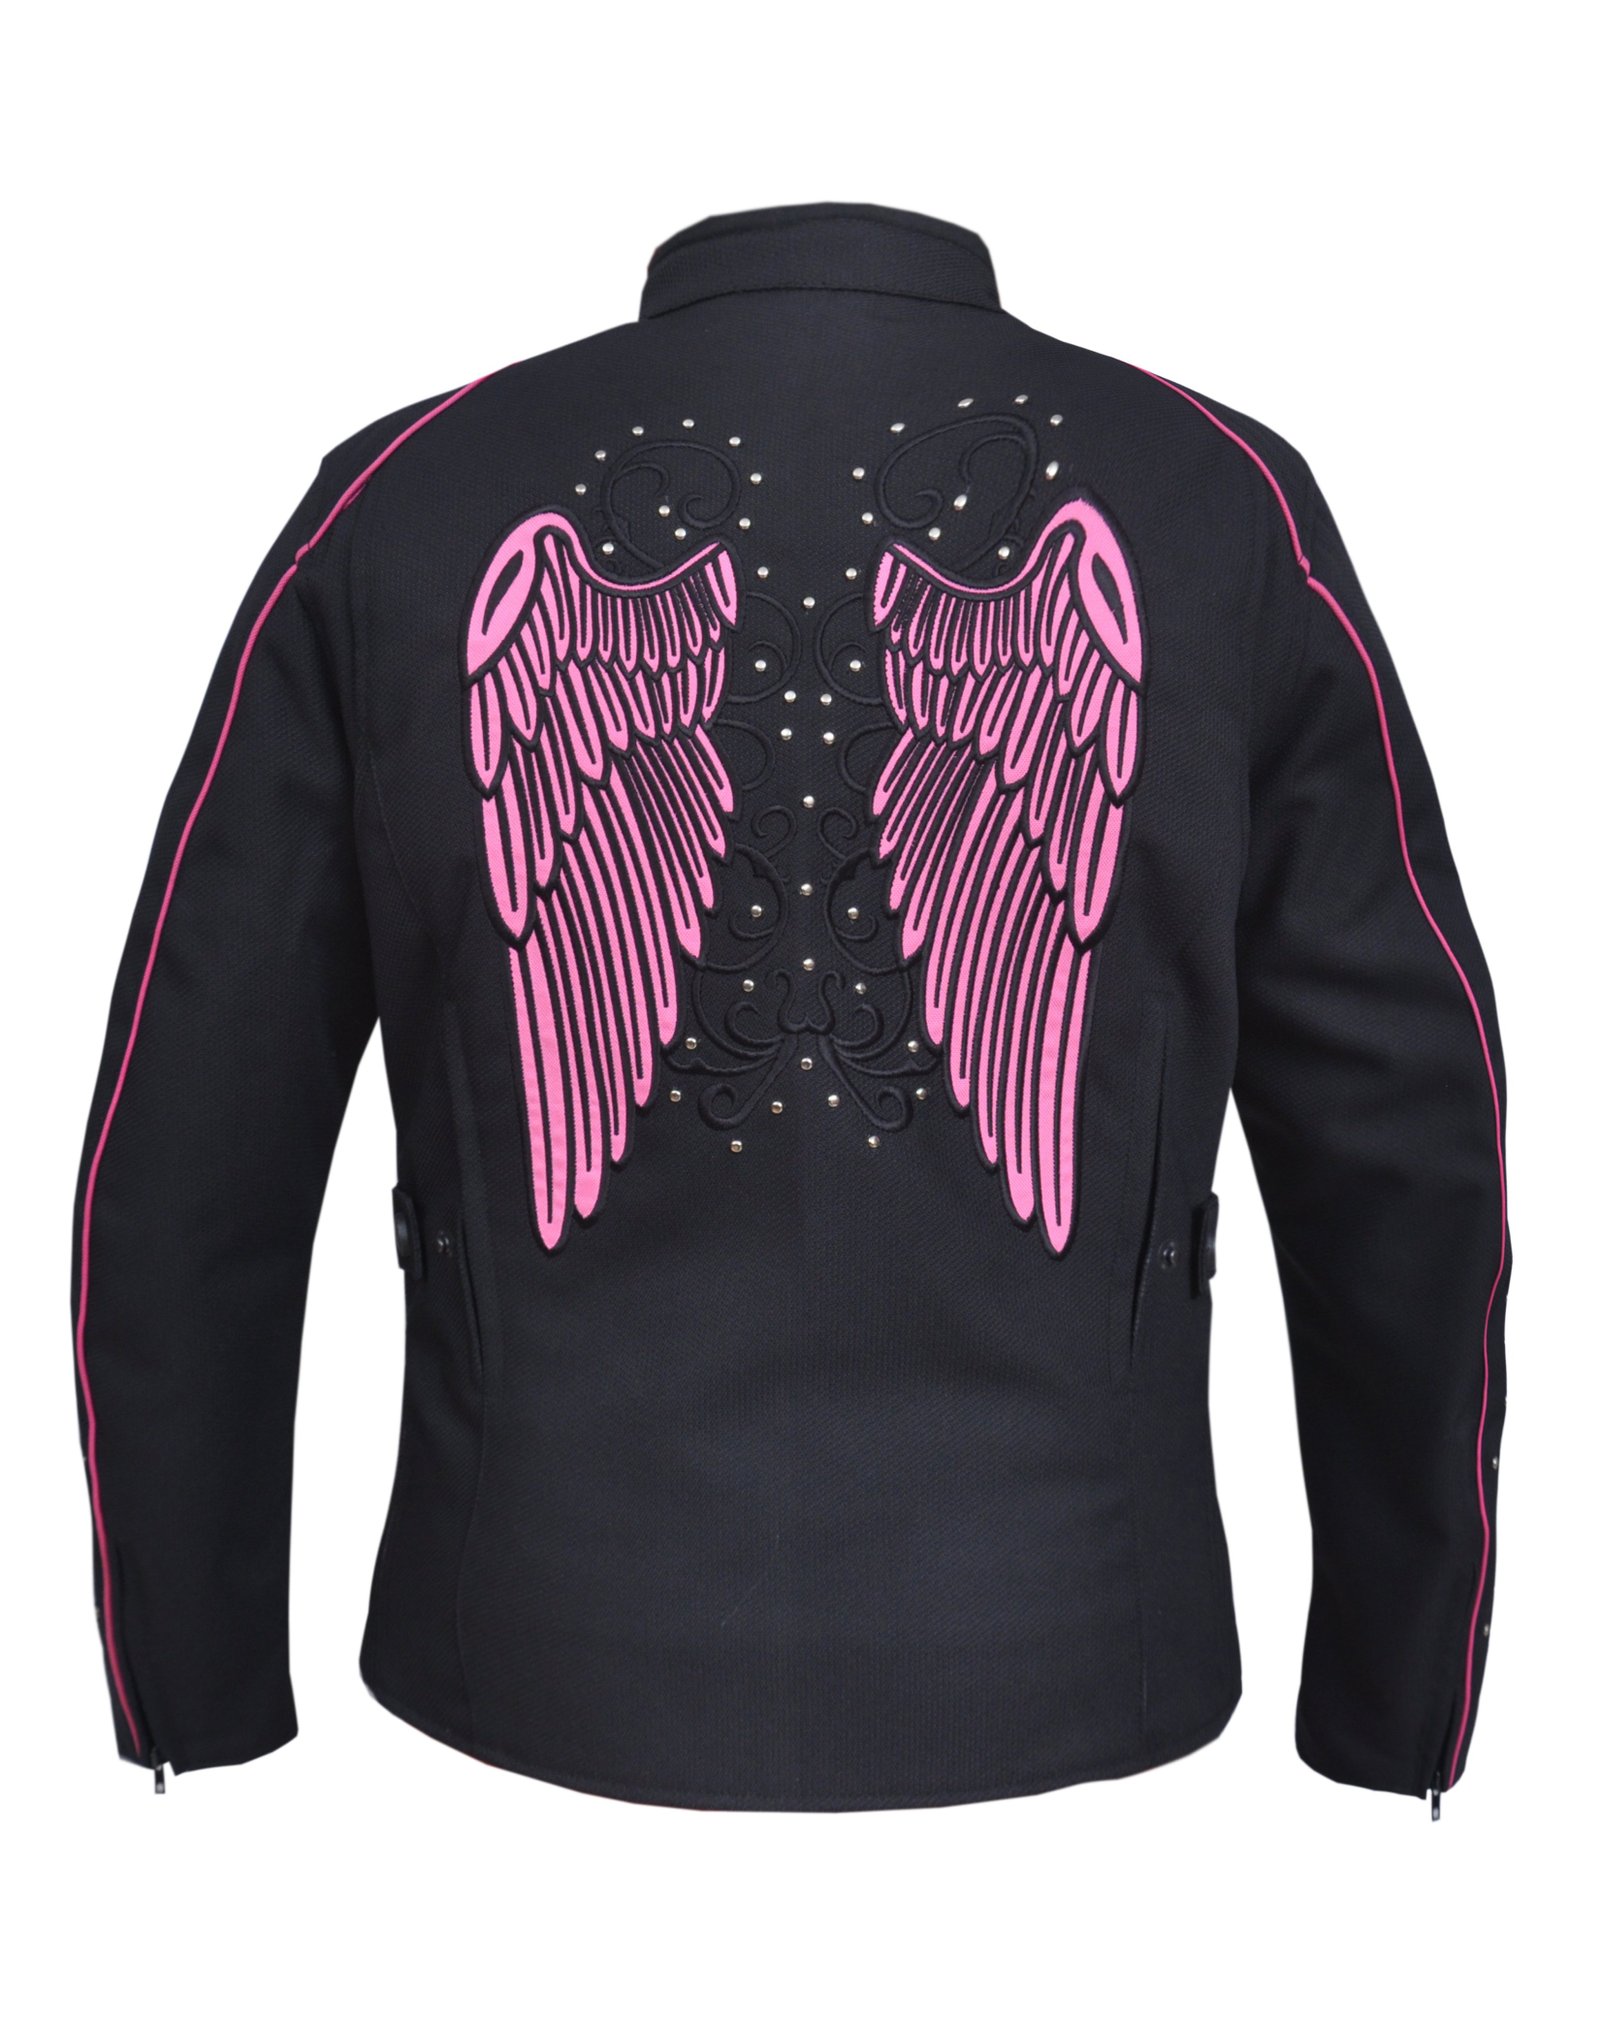 UNIK Ladies Nylon Textile Jacket With Hot Pink Wings - 3692-24-UN